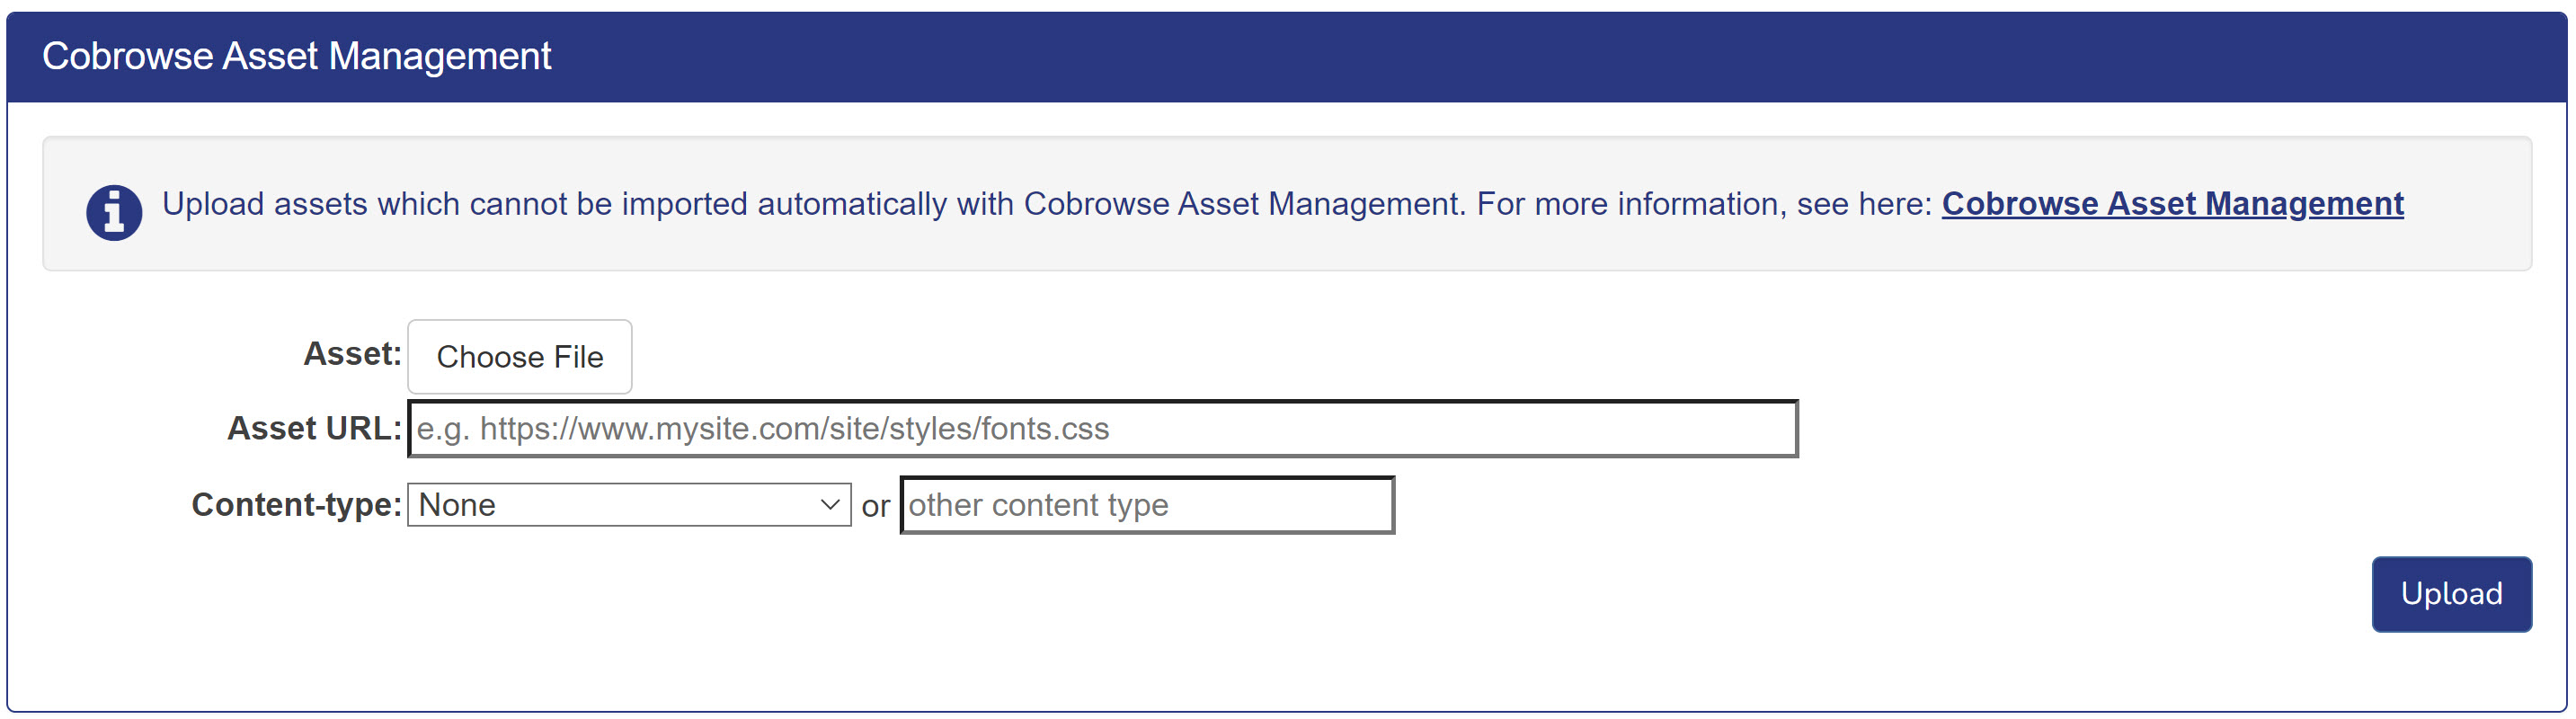 Cobrowse Asset Management UI.